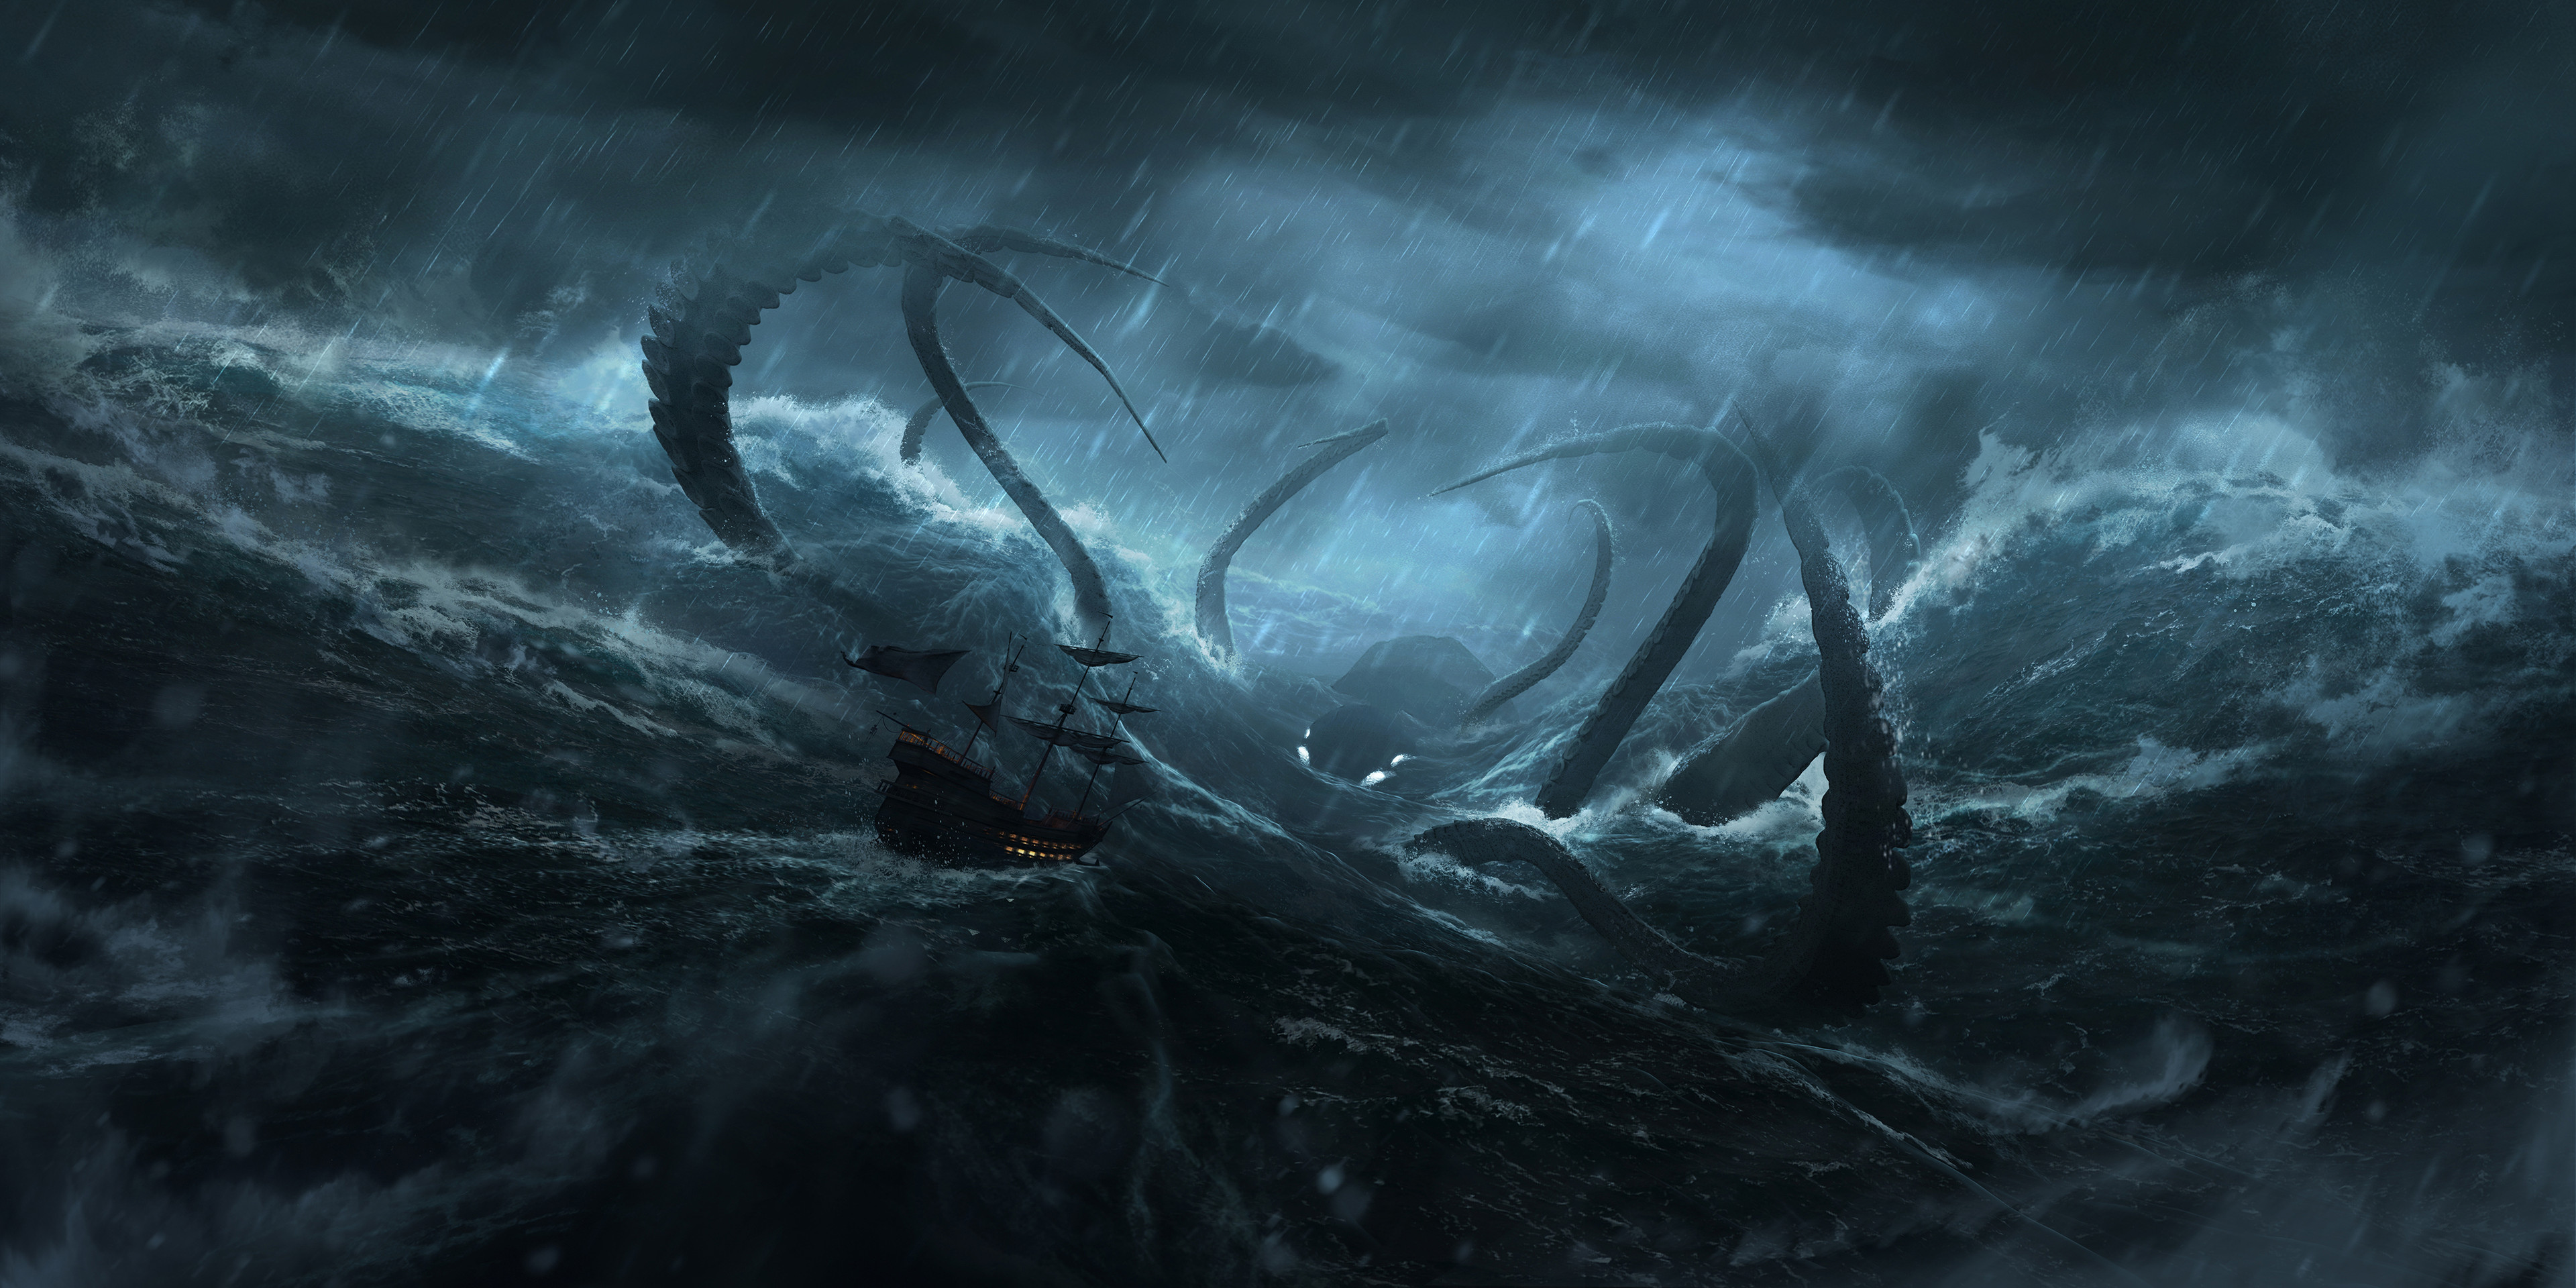 Sea Ship Storm Waves Rain Night Boat Water Creature Kraken Clouds Digital Art 3840x1920